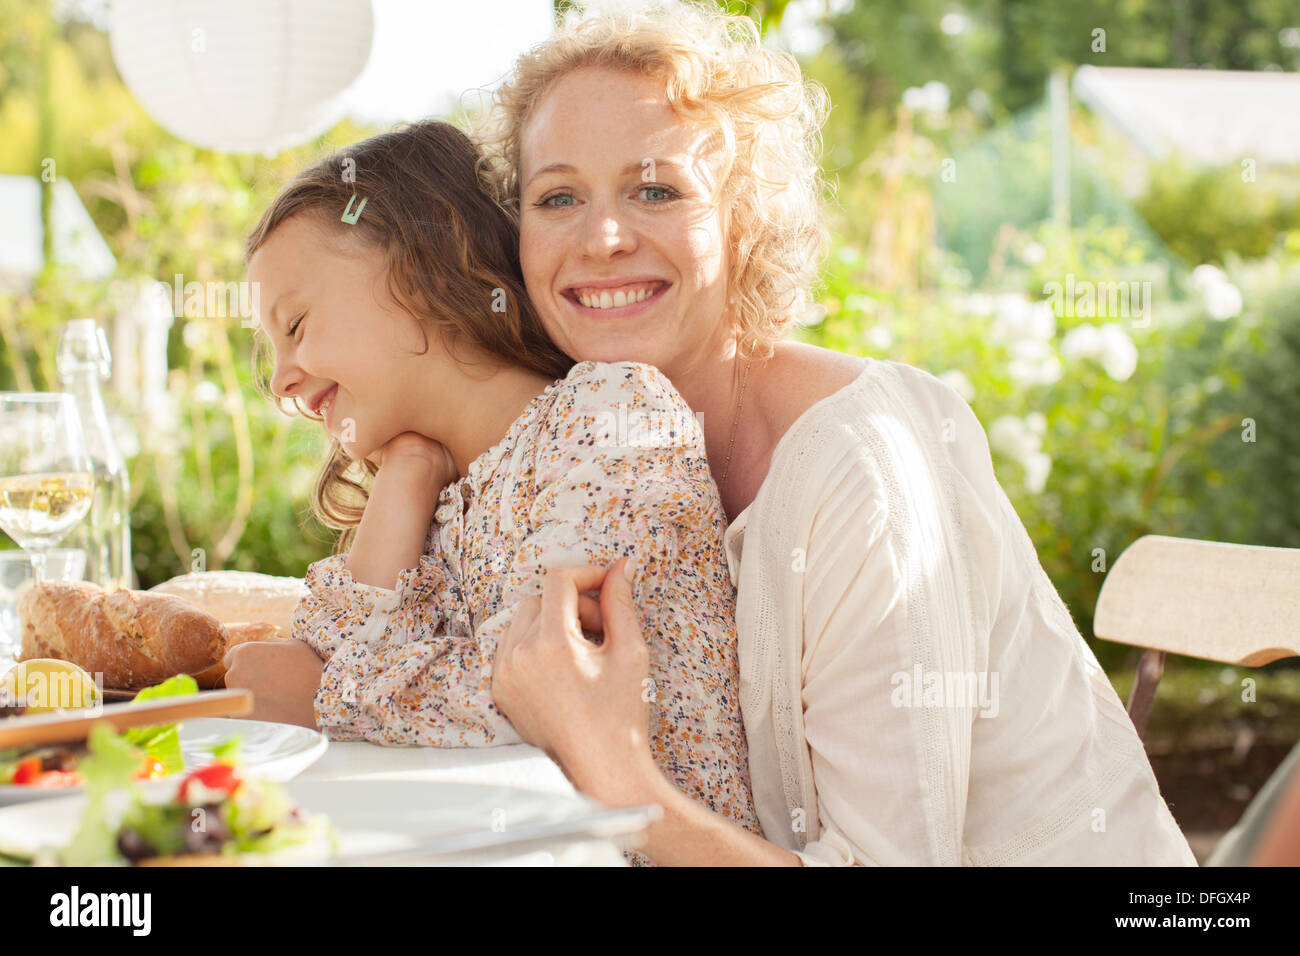 Mère et fille smiling at table outdoors Banque D'Images